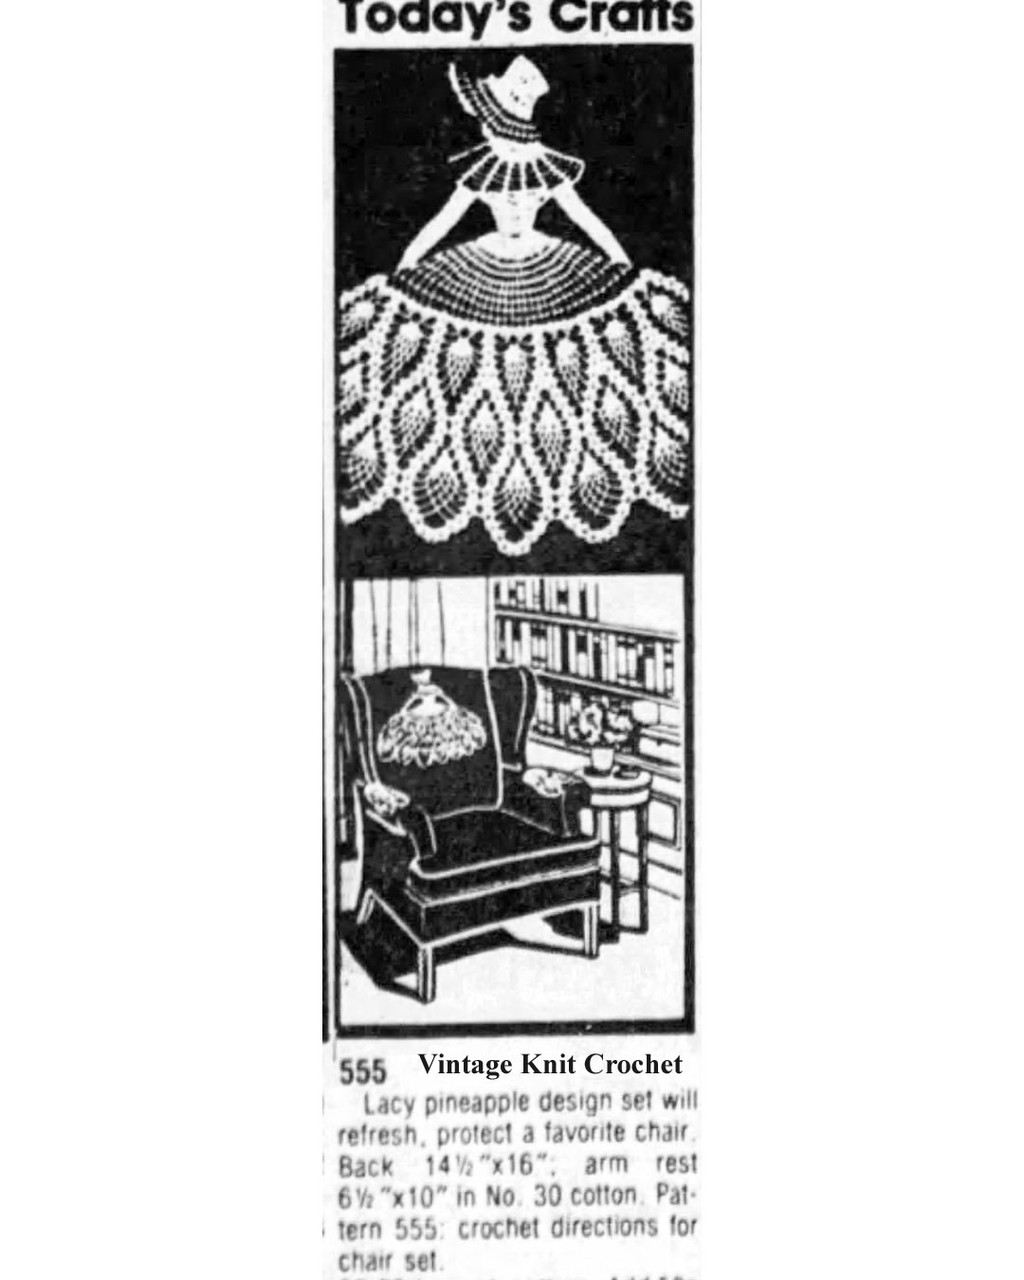 Mail Order Design 555 crocheted chair set newspaper advertisement